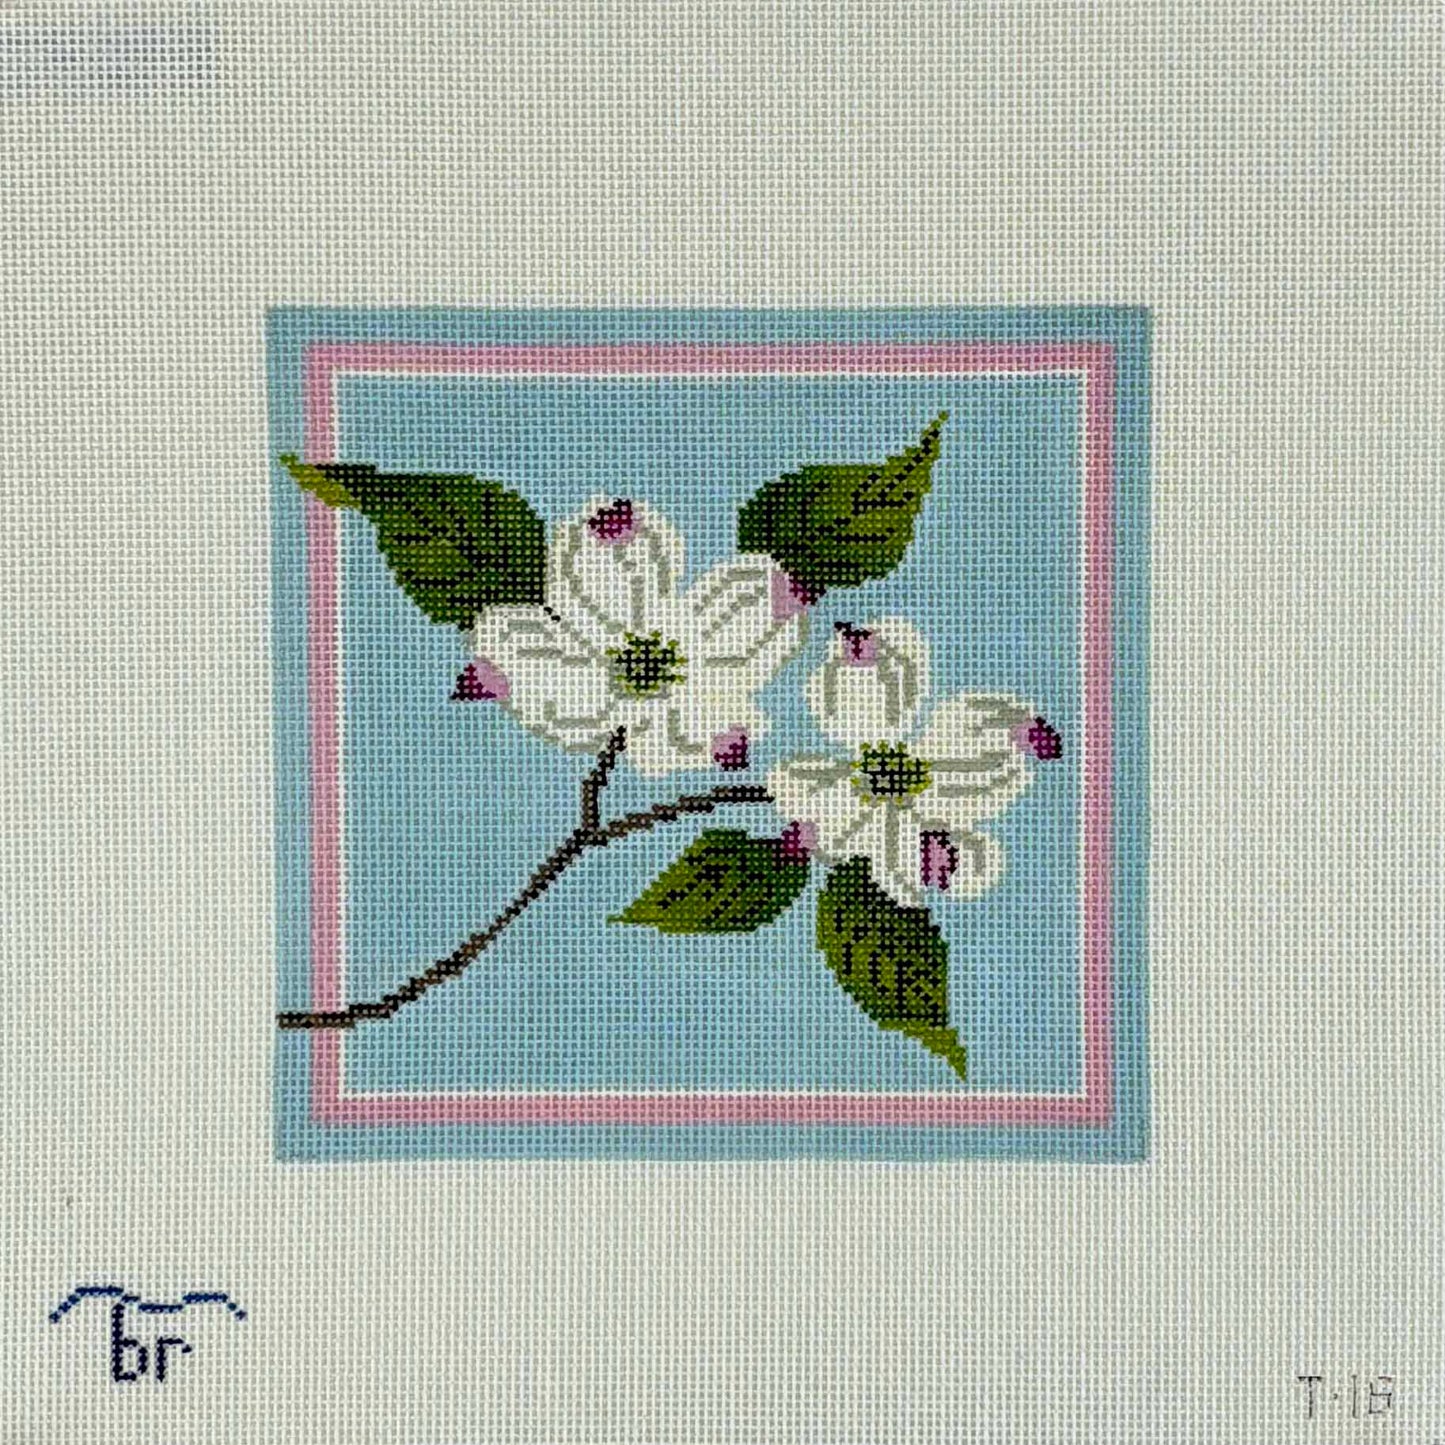 White Dogwood Blossom - 18 mesh